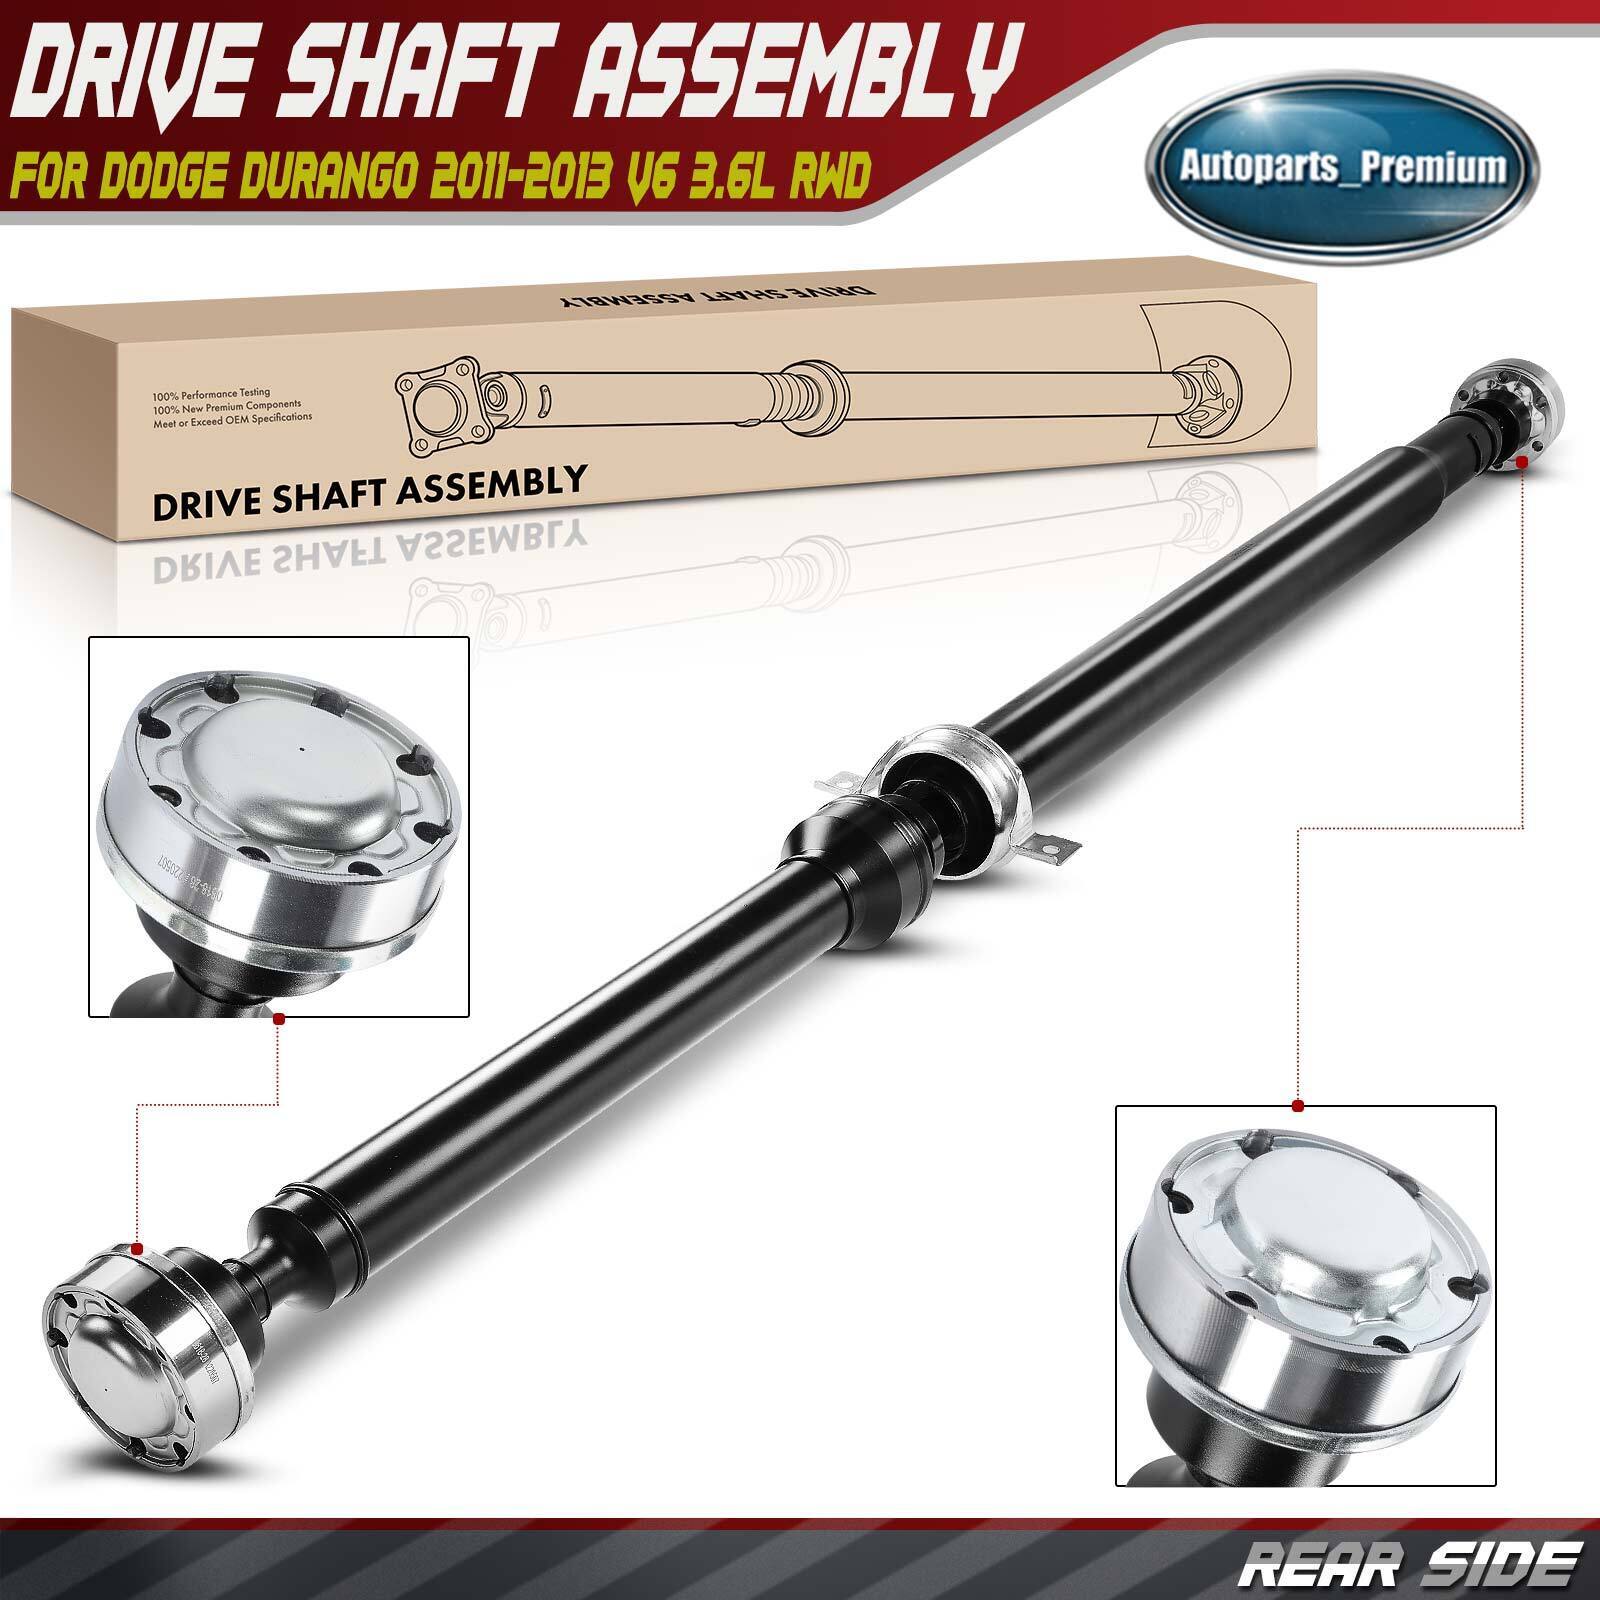 New Rear Driveshaft Prop Shaft Assembly for Dodge Durango 2011-2013 V6 3.6L RWD